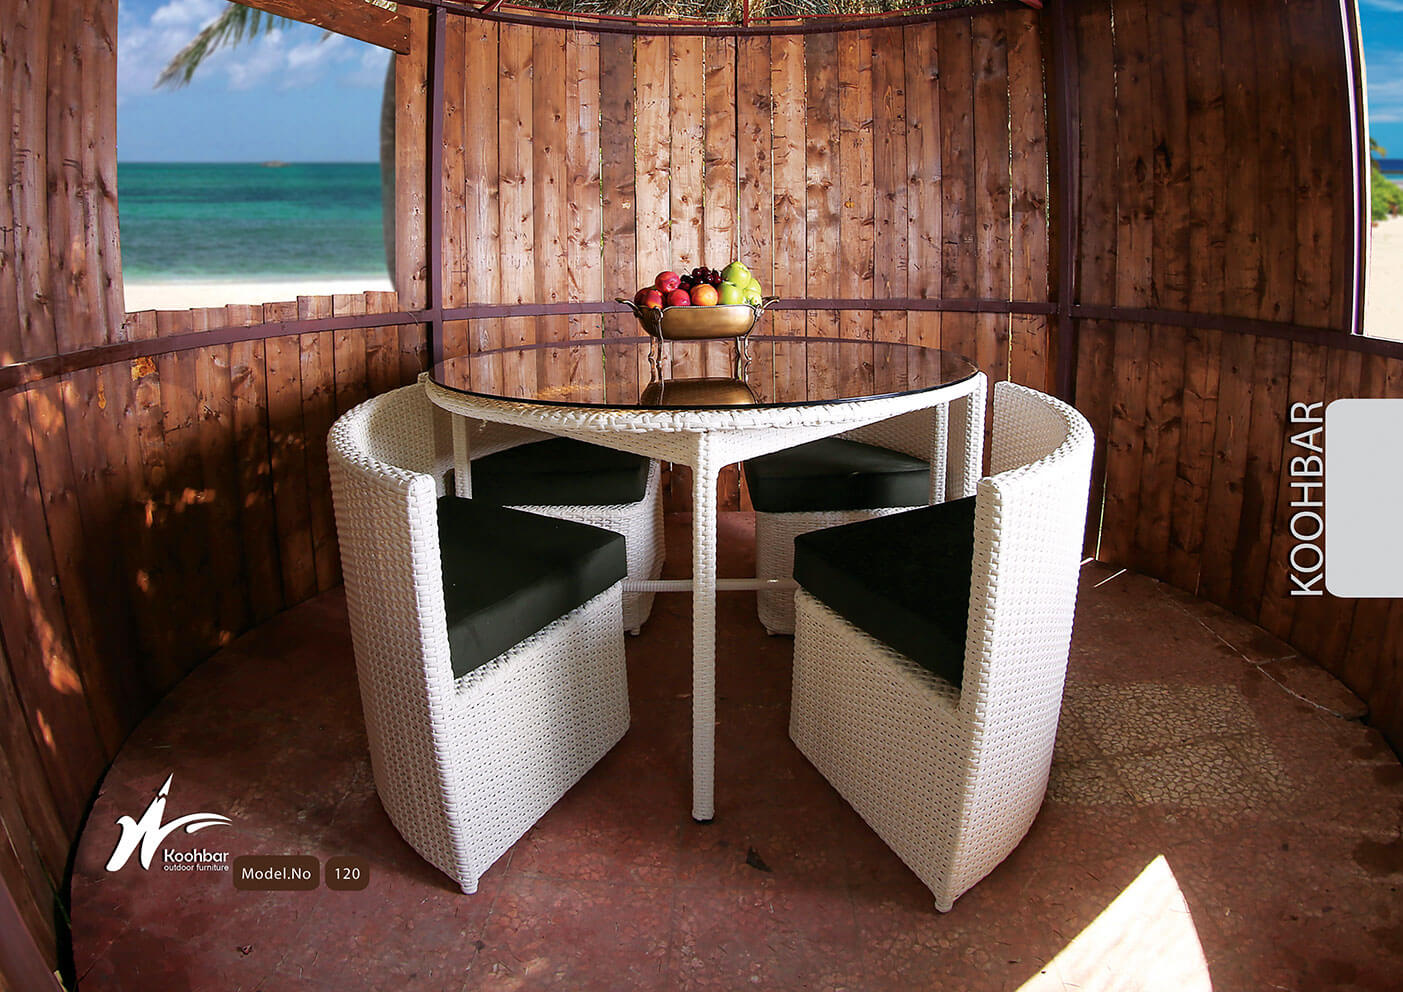 kohbar patio conversation sets 120 model0 - ست میز صندلی حصیری گرد کوهبر مدل ۱۲۰ -  - patio-dining-furniture